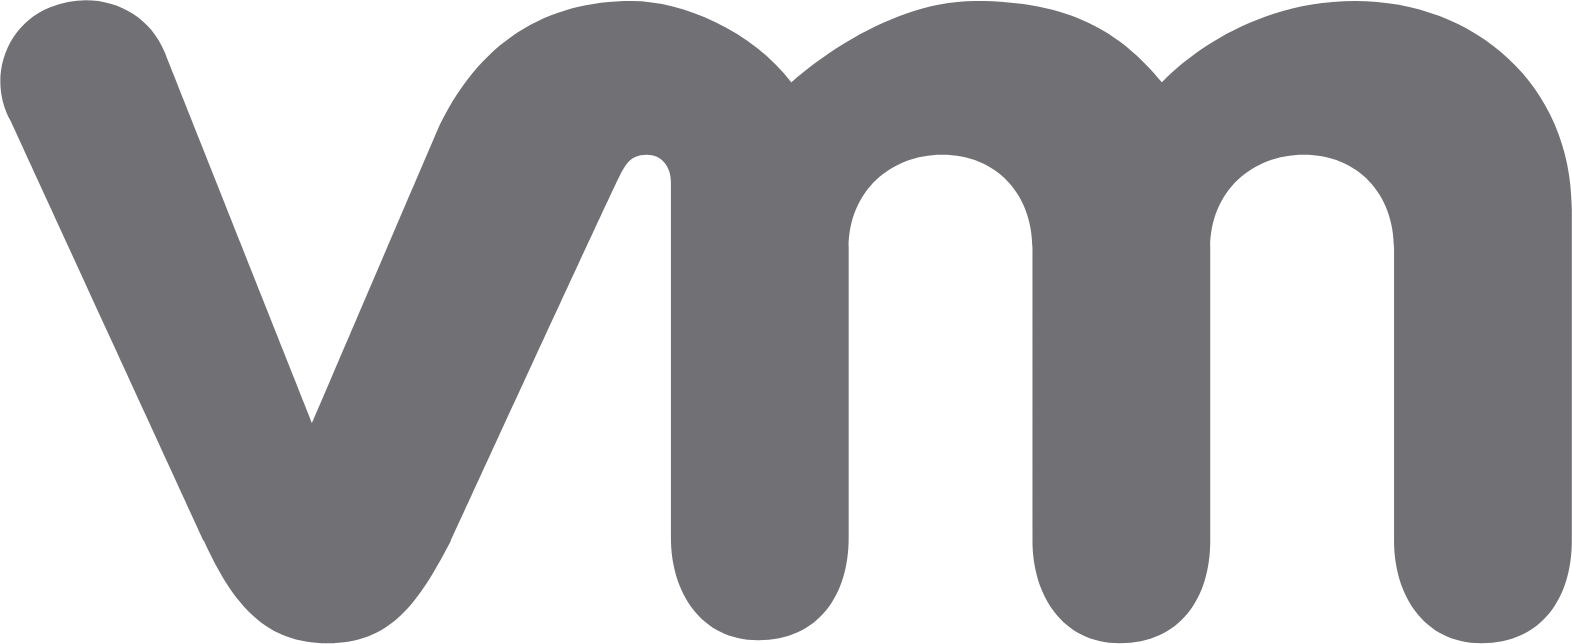 Vmware logo (PNG transparent)